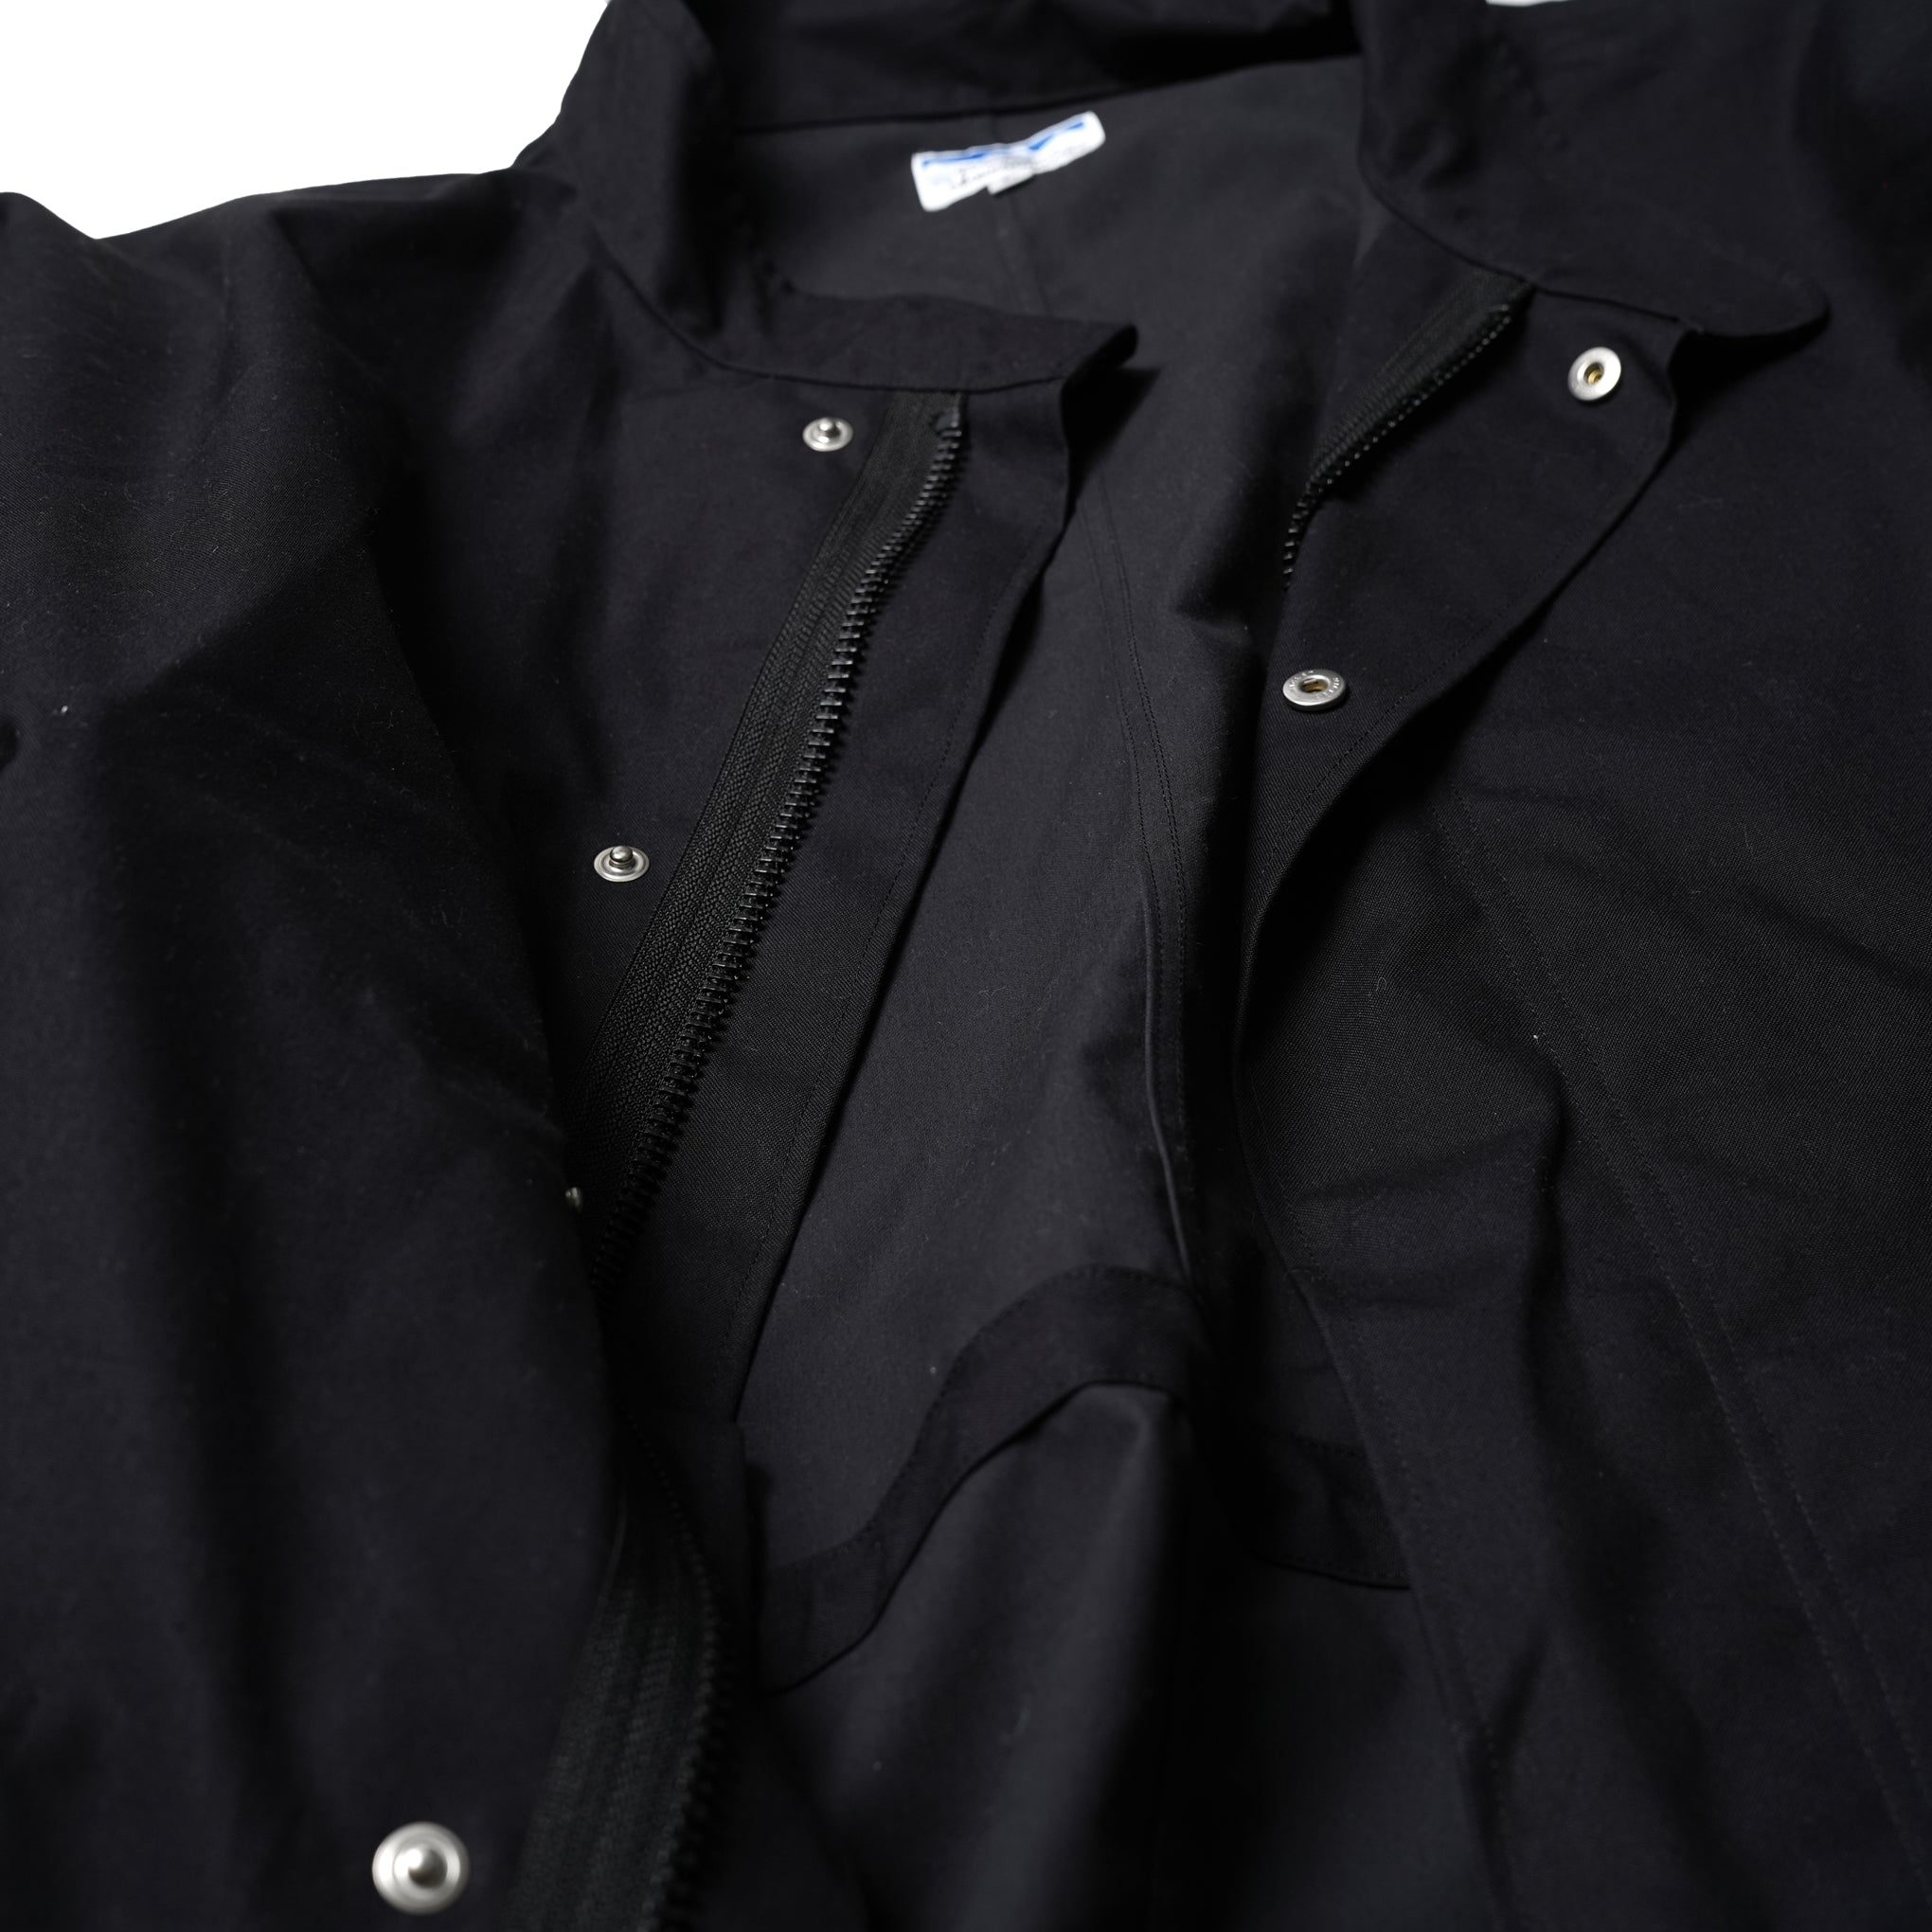 No:PH23FW-008 | Name:P.H. M. BM S.WAX CLOTH MODS COAT | Color:Black【POWDERHORN MOUNTAINEERING_パウダーホーンマウンテニアリング】